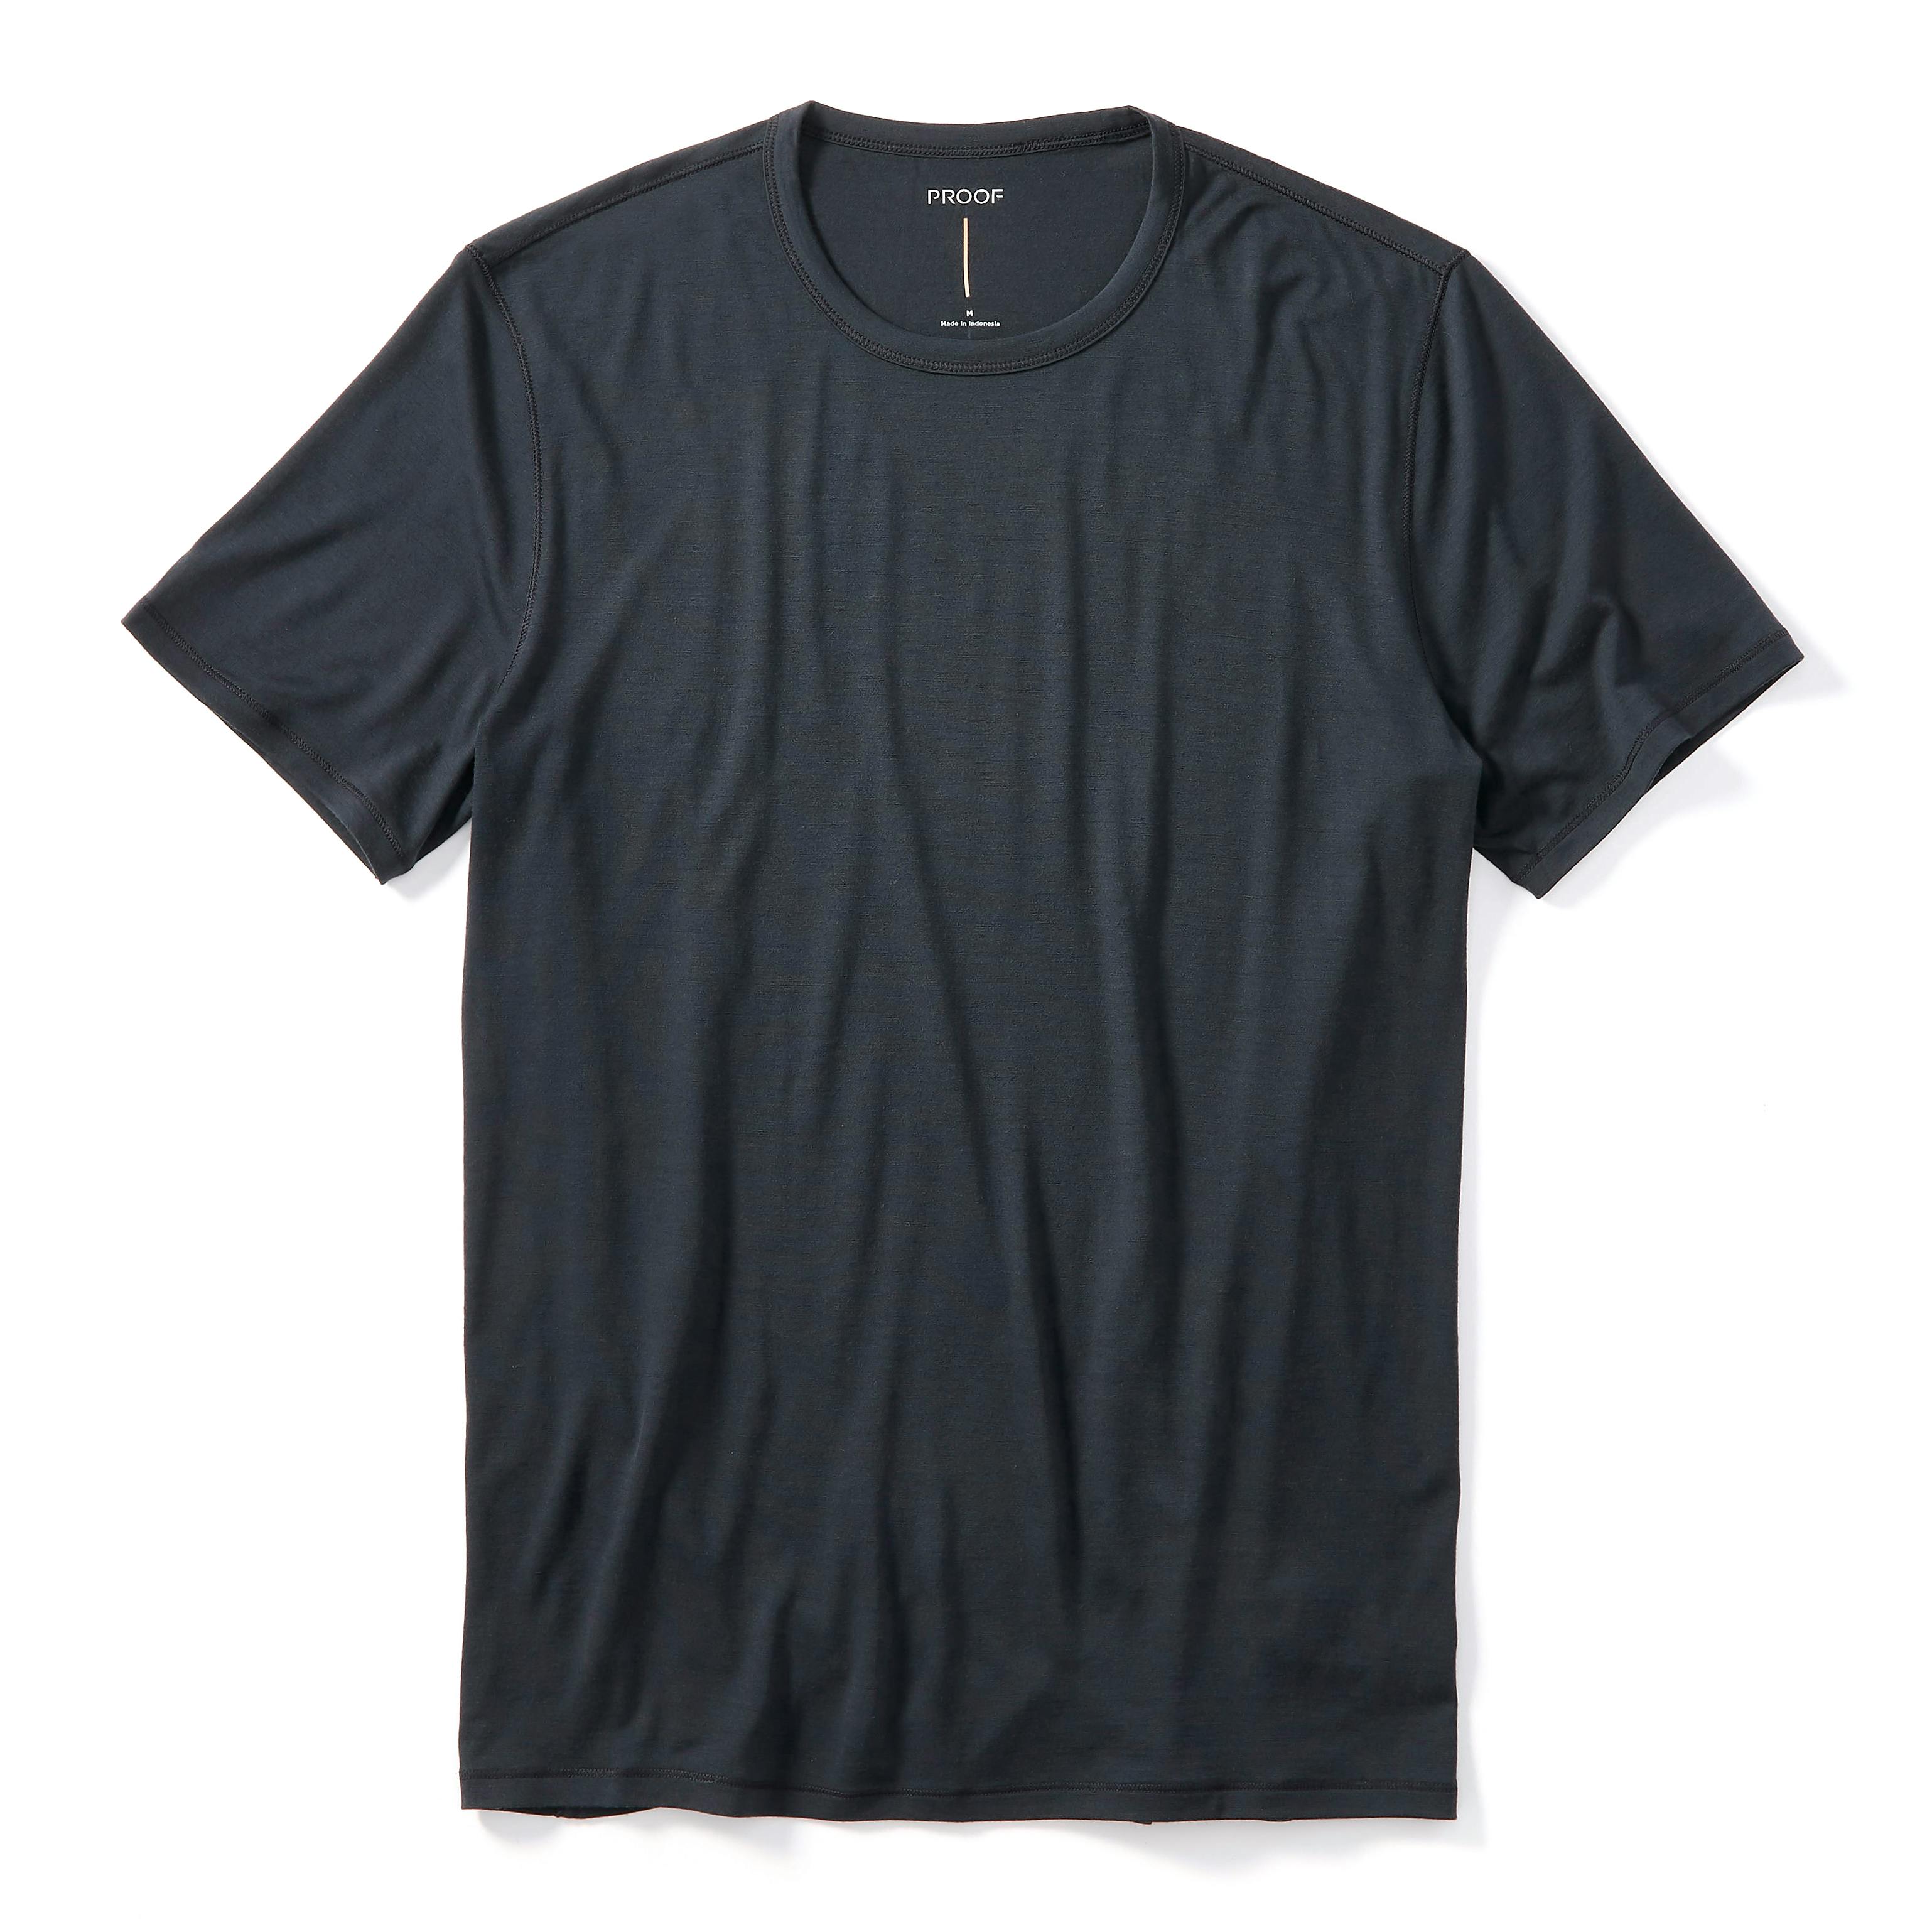 Proof 72-Hour Merino T-Shirt - Performance Fit (Original) - Stone Black | Shirts | Huckberry